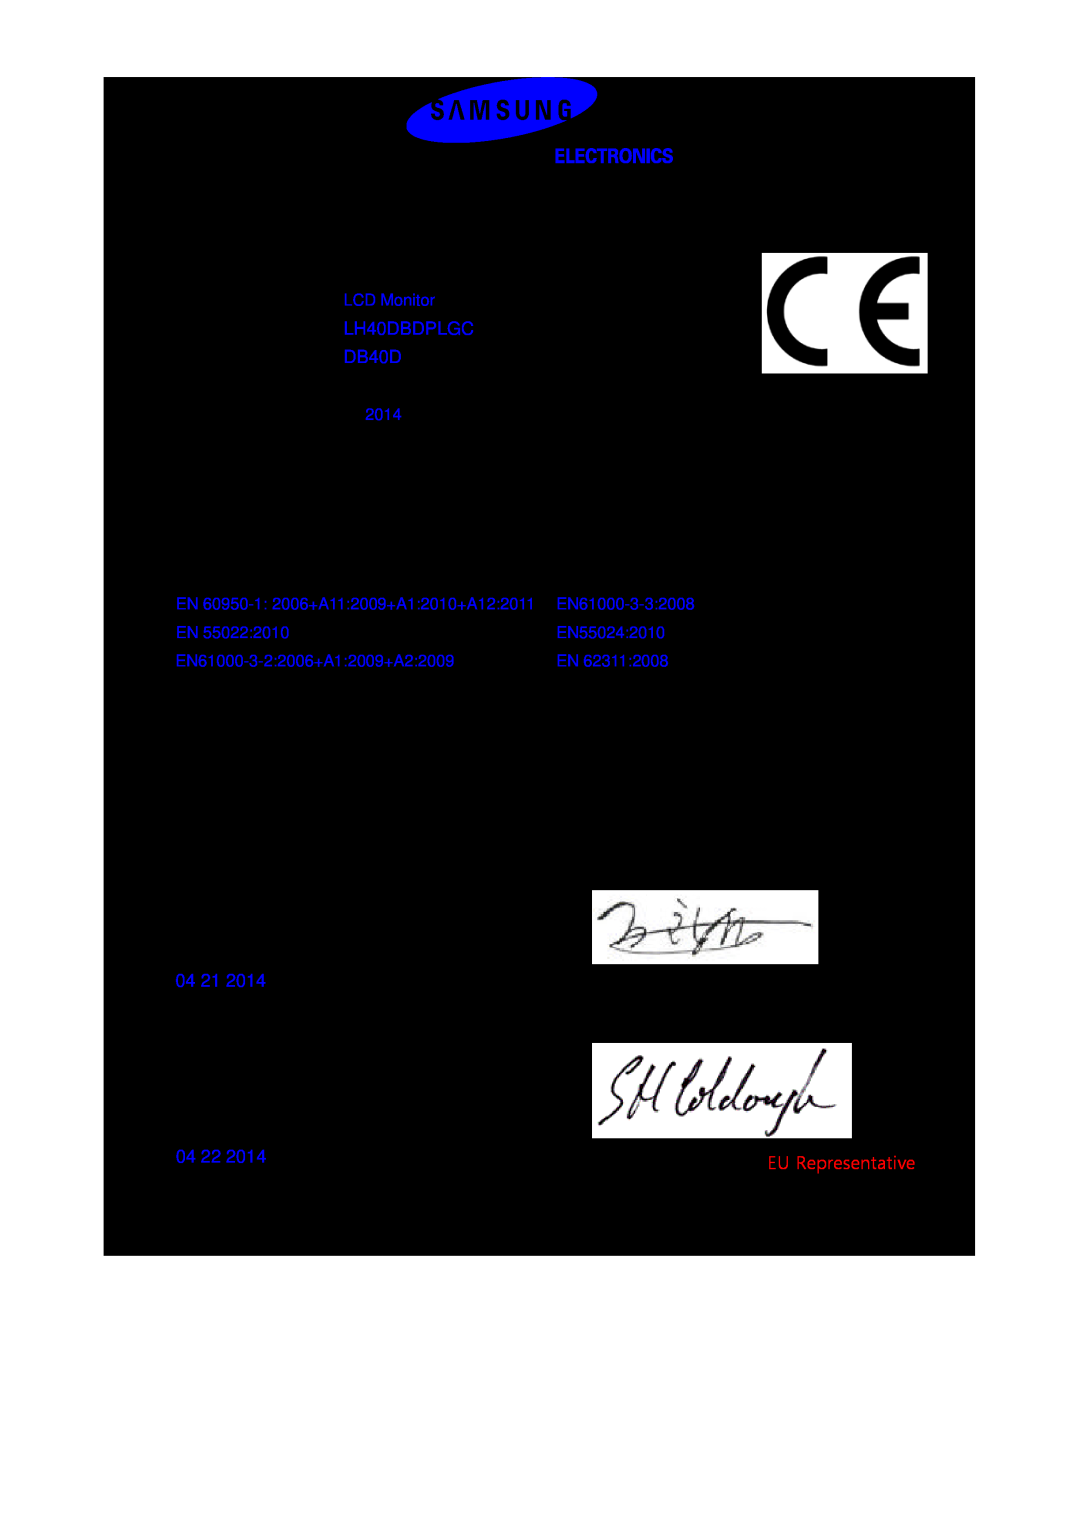 Samsung LH48DBDPLGC/EN, LH32DBDPLGC/EN, LH40DBDPLGC/EN manual Declaration of Conformity, DB40D, 04 21, 04 22 